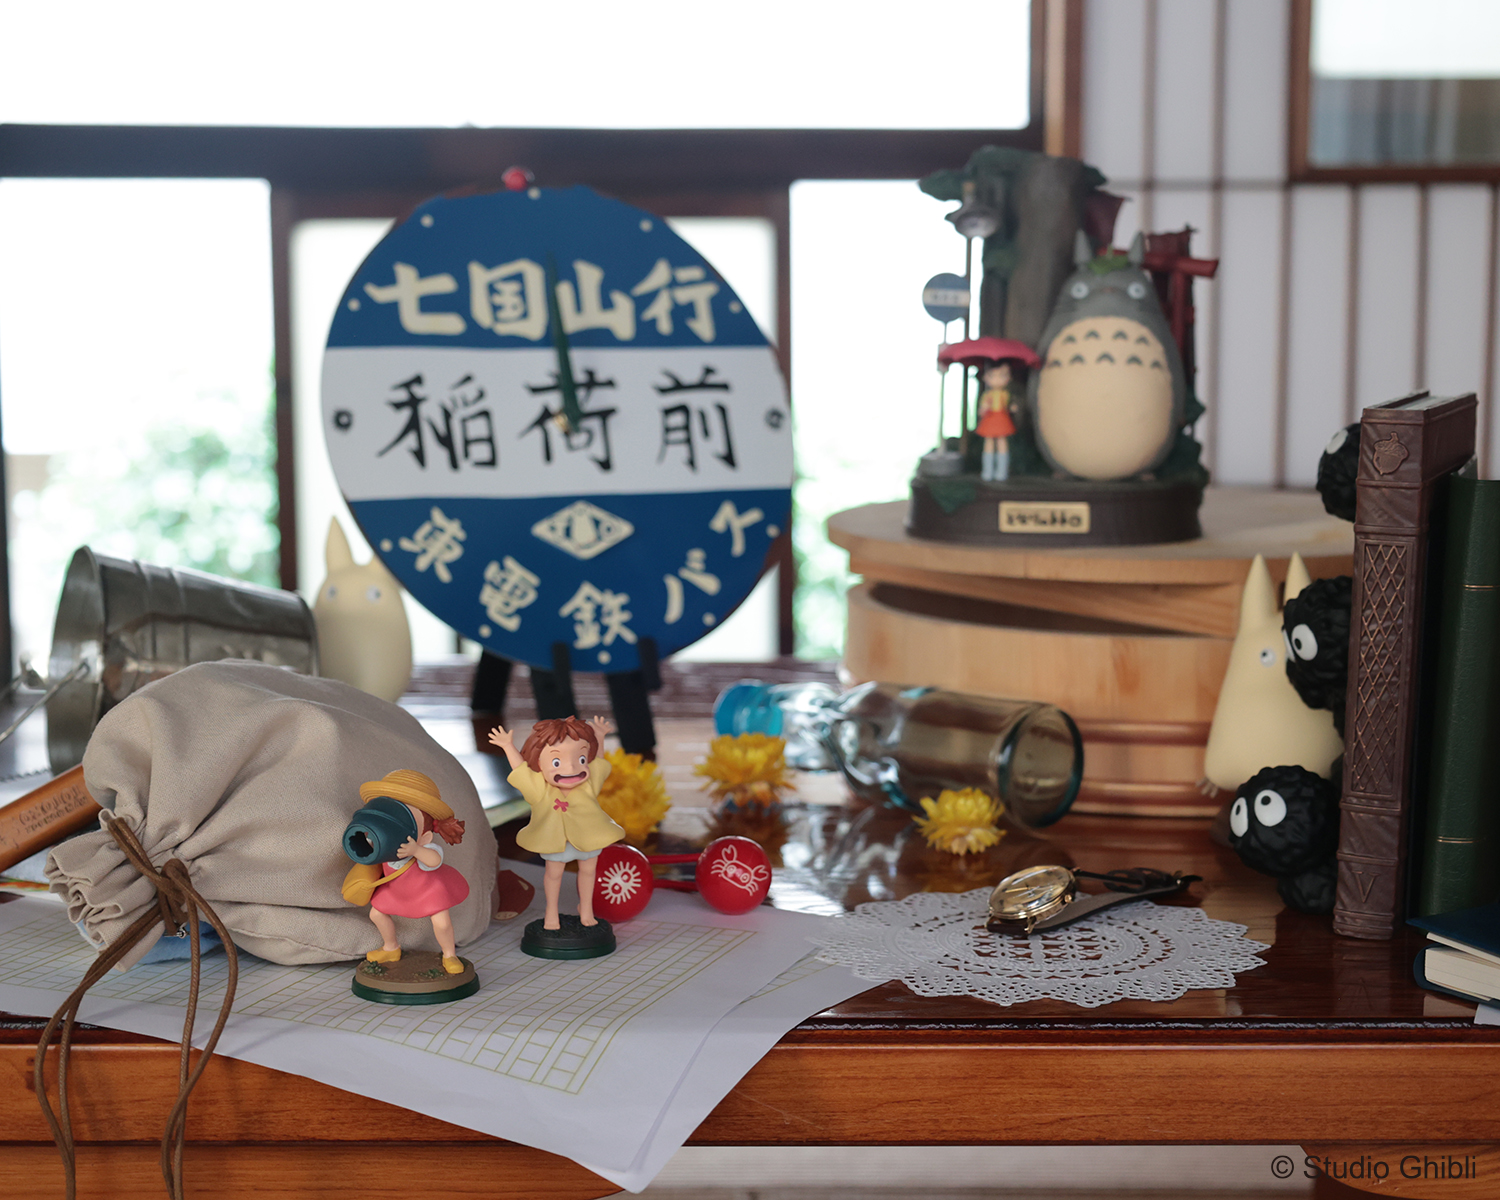 Studio Ghibli releases amazing new My Neighbour Totoro merchandise